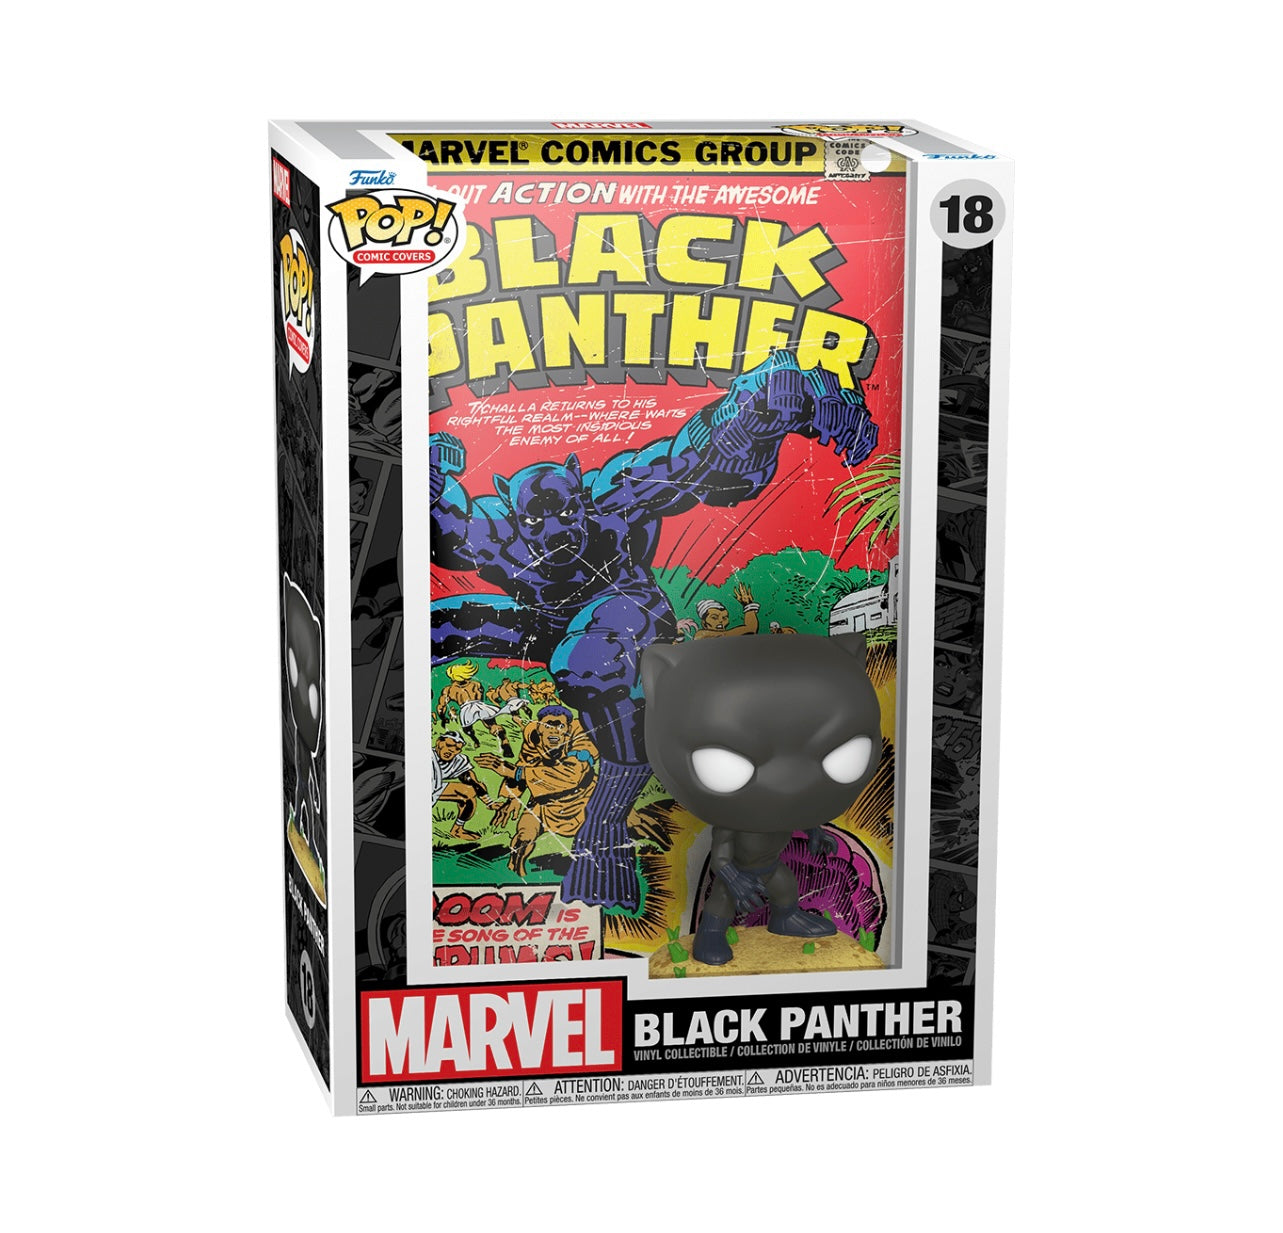 POP! Marvel Comic Cover Black Panther #18